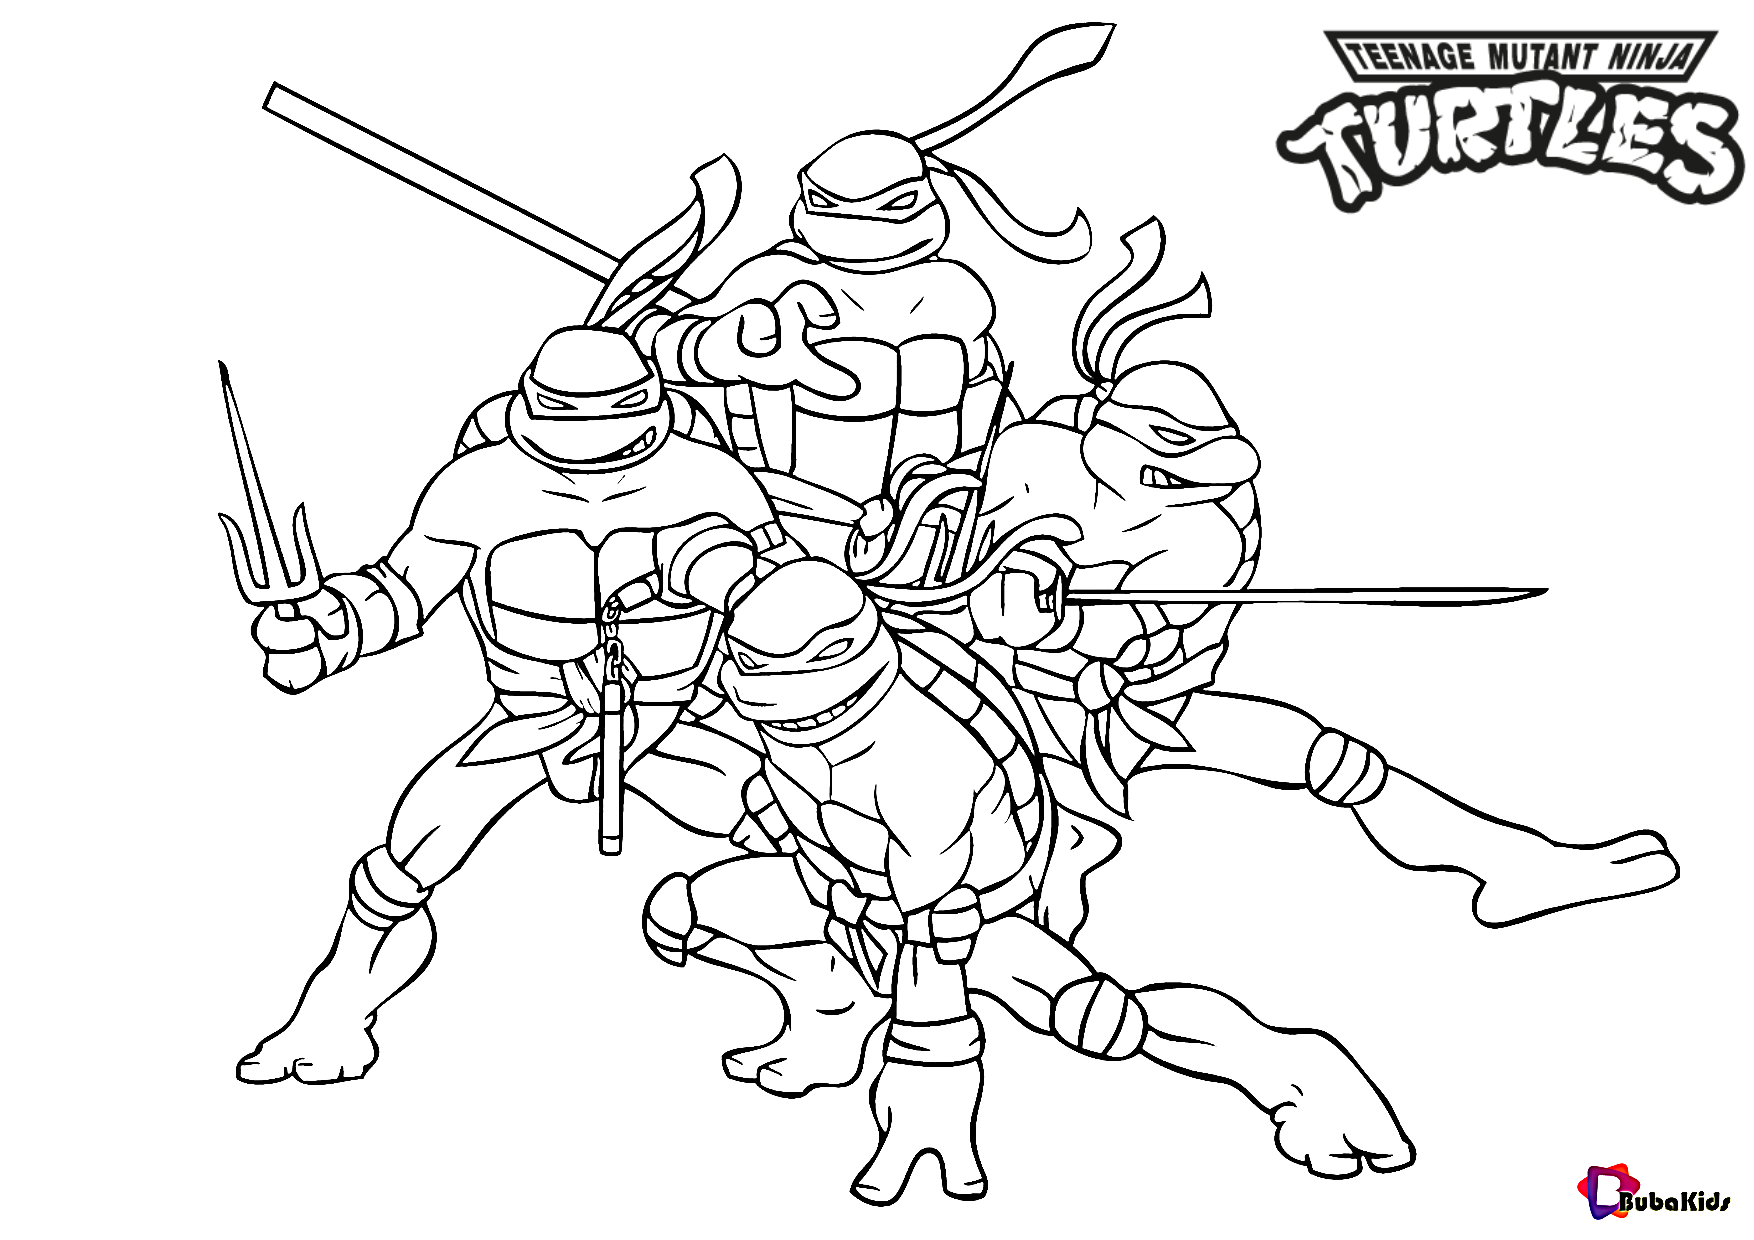 Teenage mutant ninja turtles coloring page for kids Wallpaper